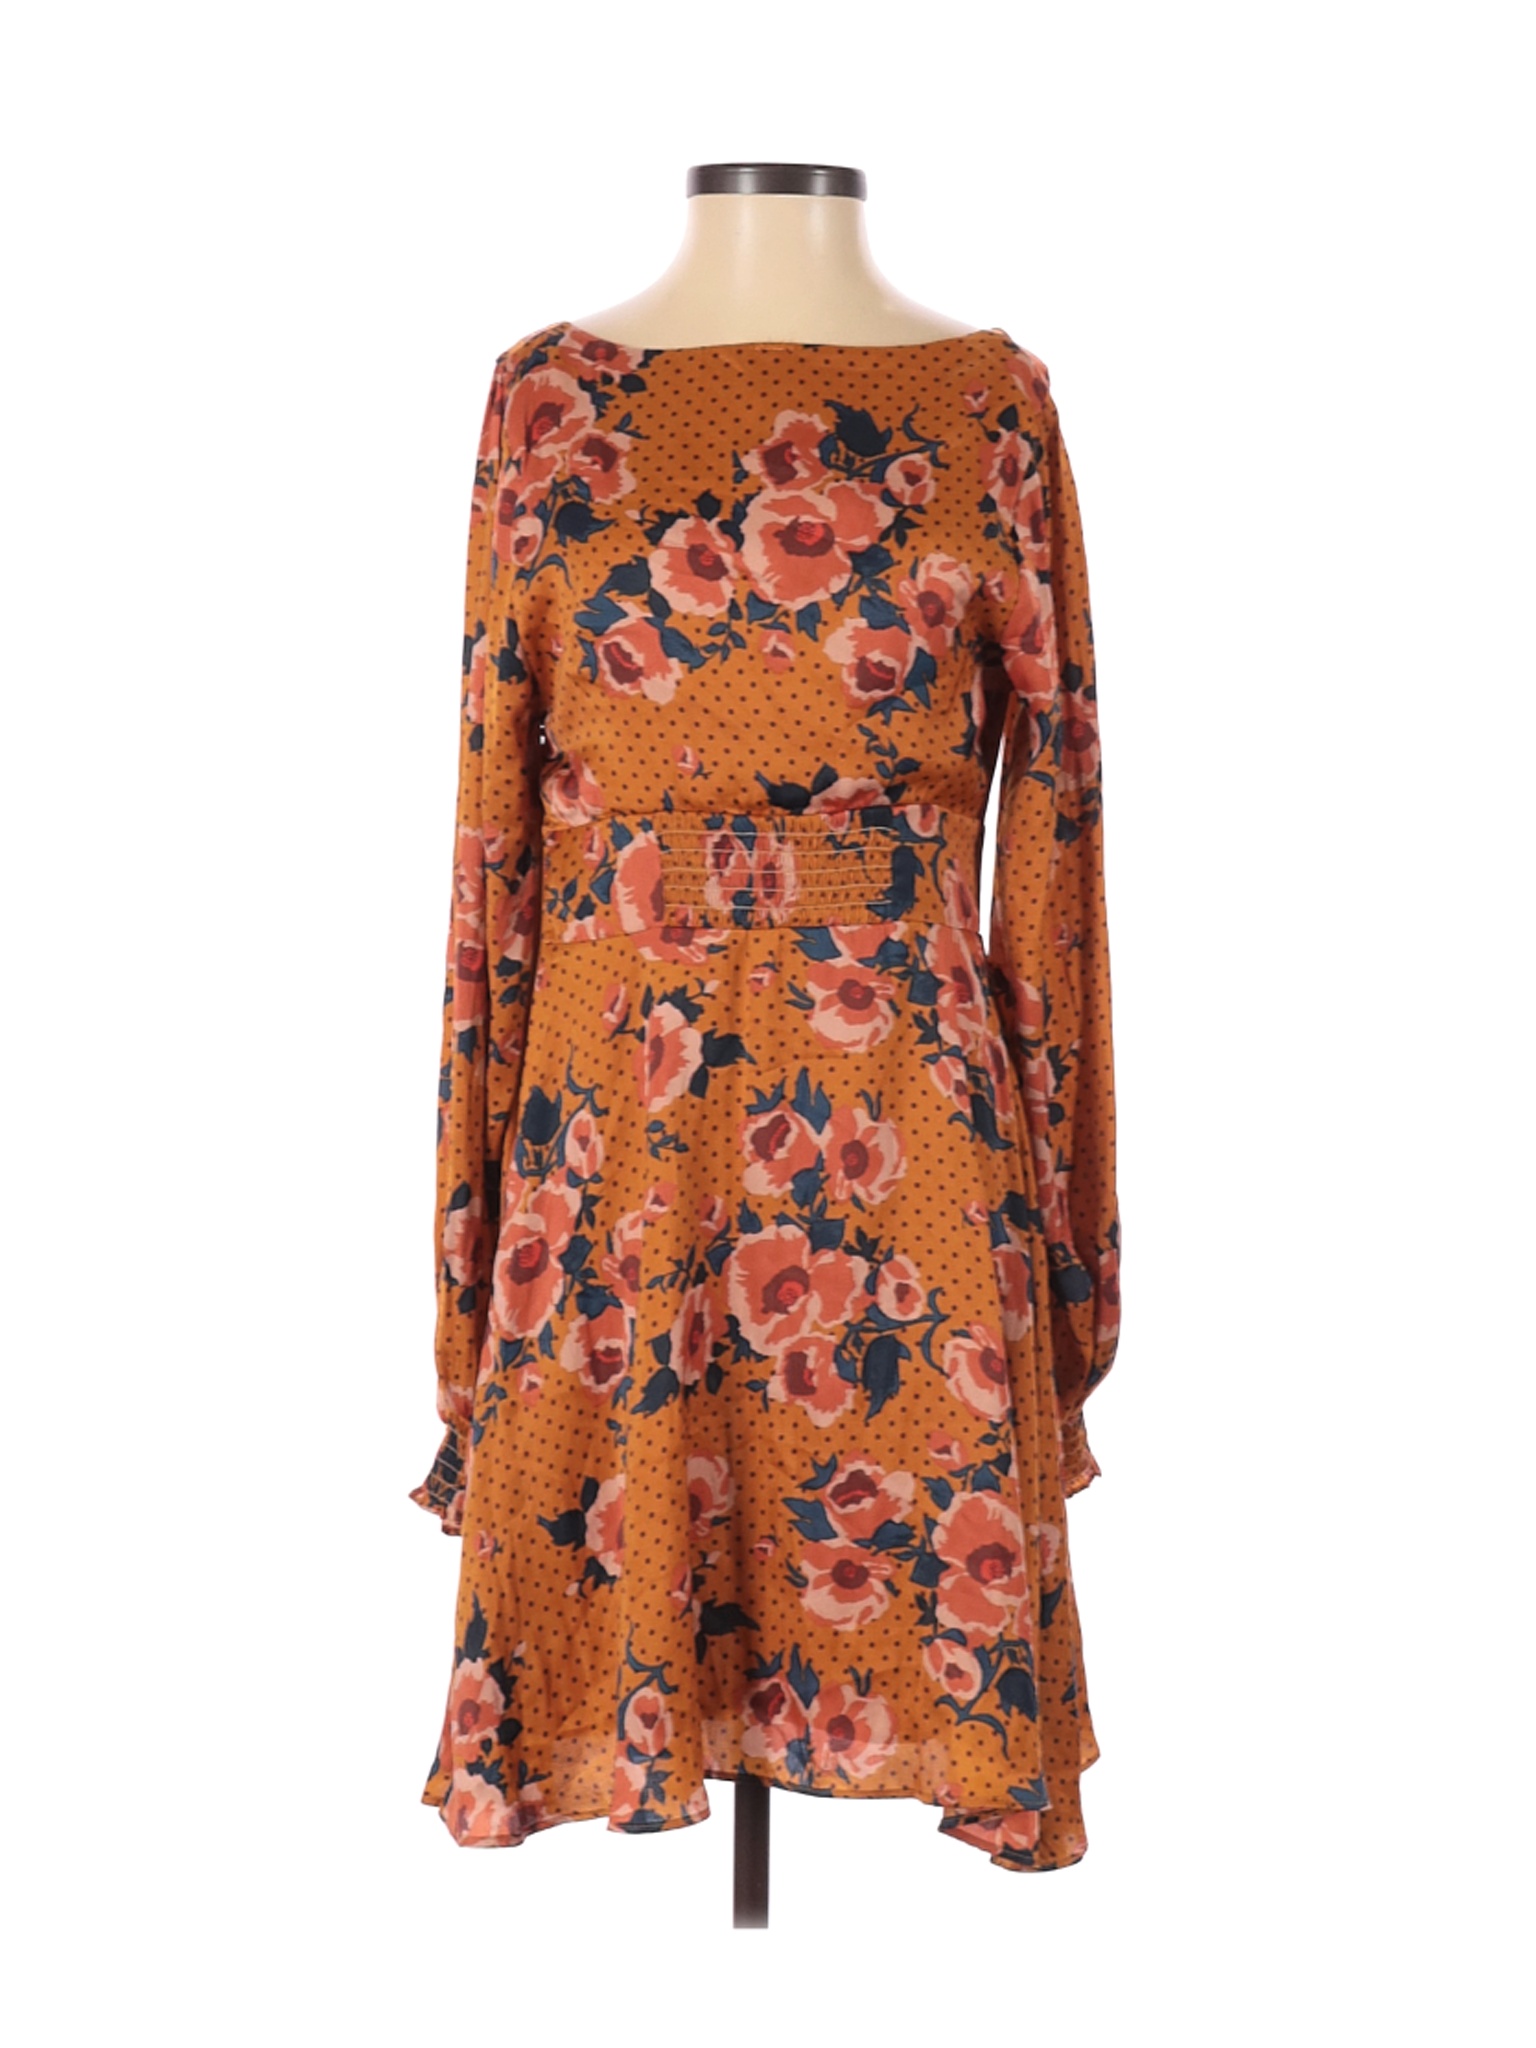 NWT Free People Women Orange Casual Dress 4 | eBay